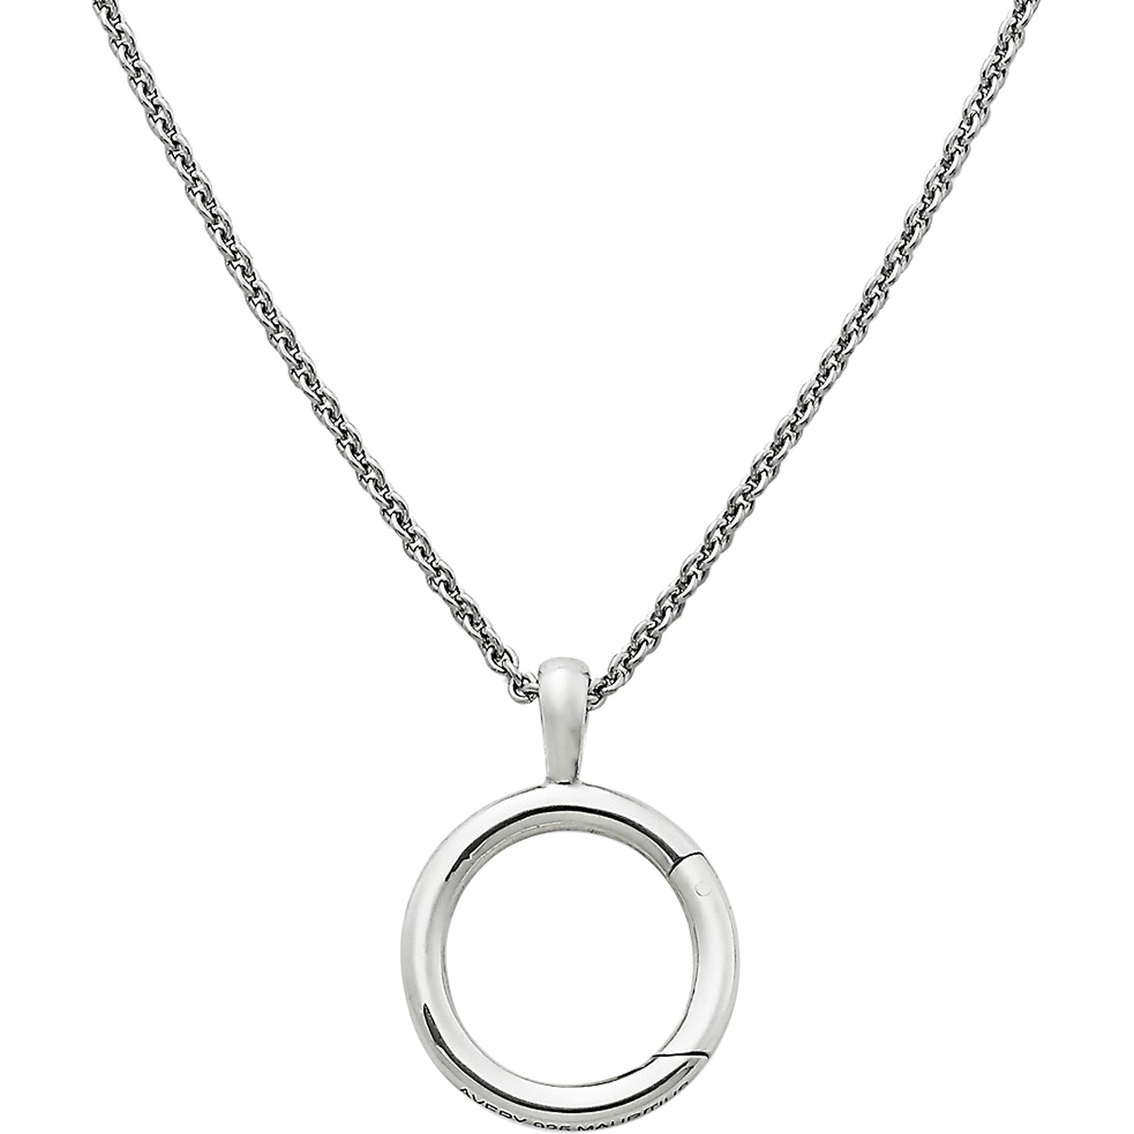 James Avery Circlet Charm Holder Necklace - Image 2 of 3